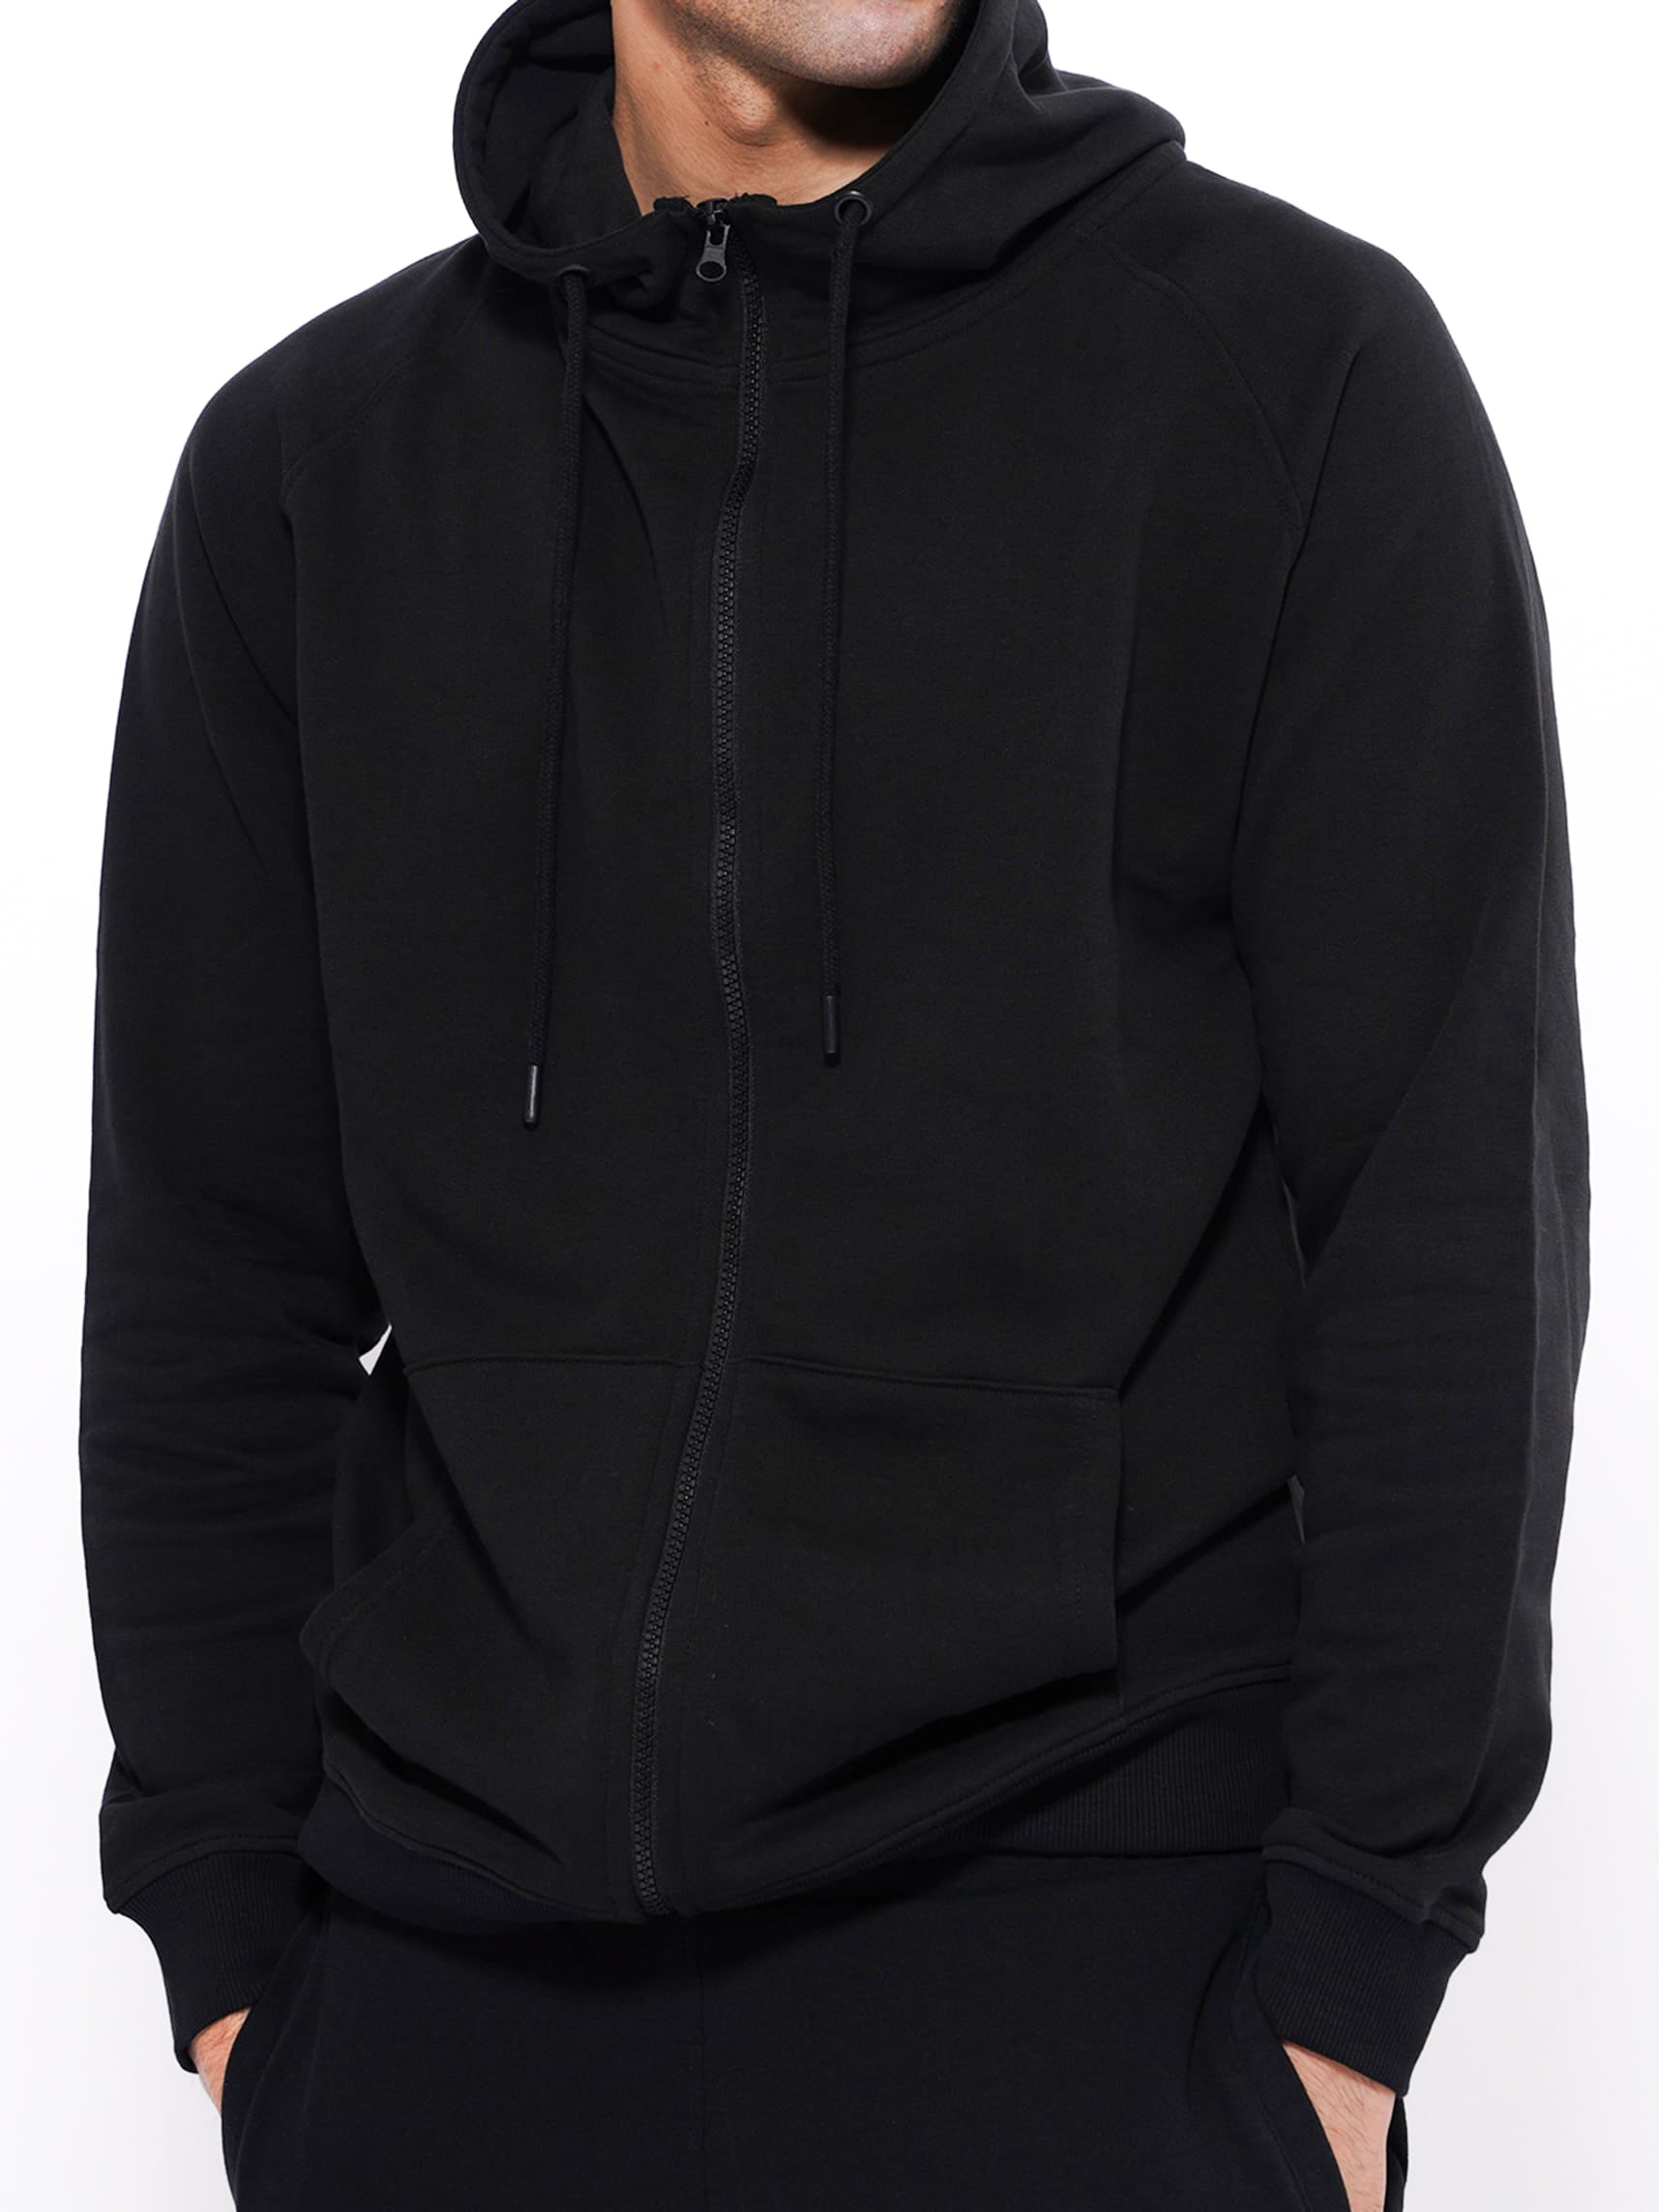 Men’s Winter Premium Cotton pocket Hoodie Black Color - inteblu